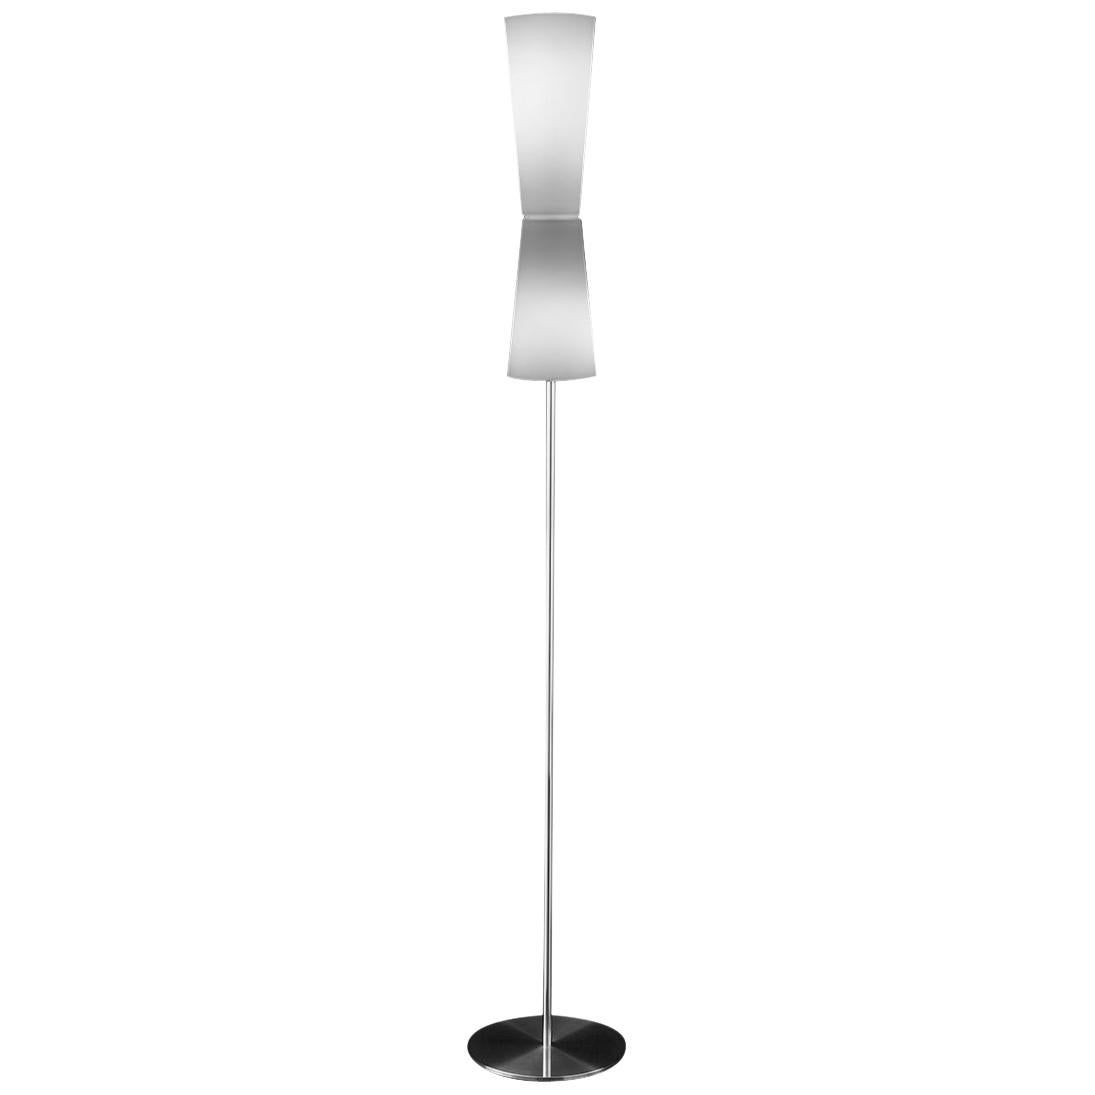 Stefano Casciani Floor Lamp 'Lu-Lu' Murano Glass and Metal by Oluce For Sale